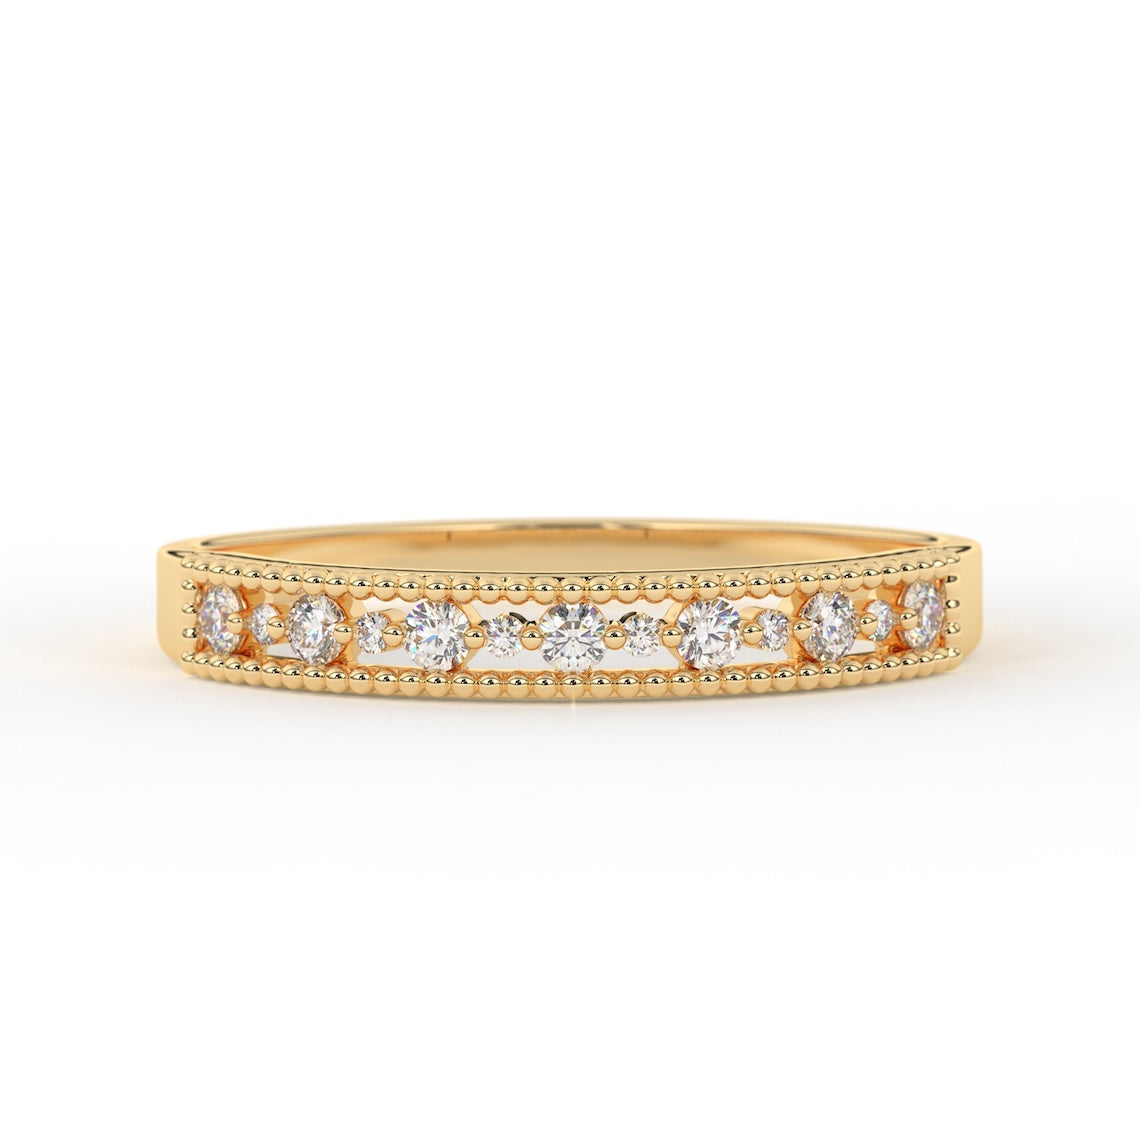 Vintage Style Diamond Wedding Ring 14k Gold